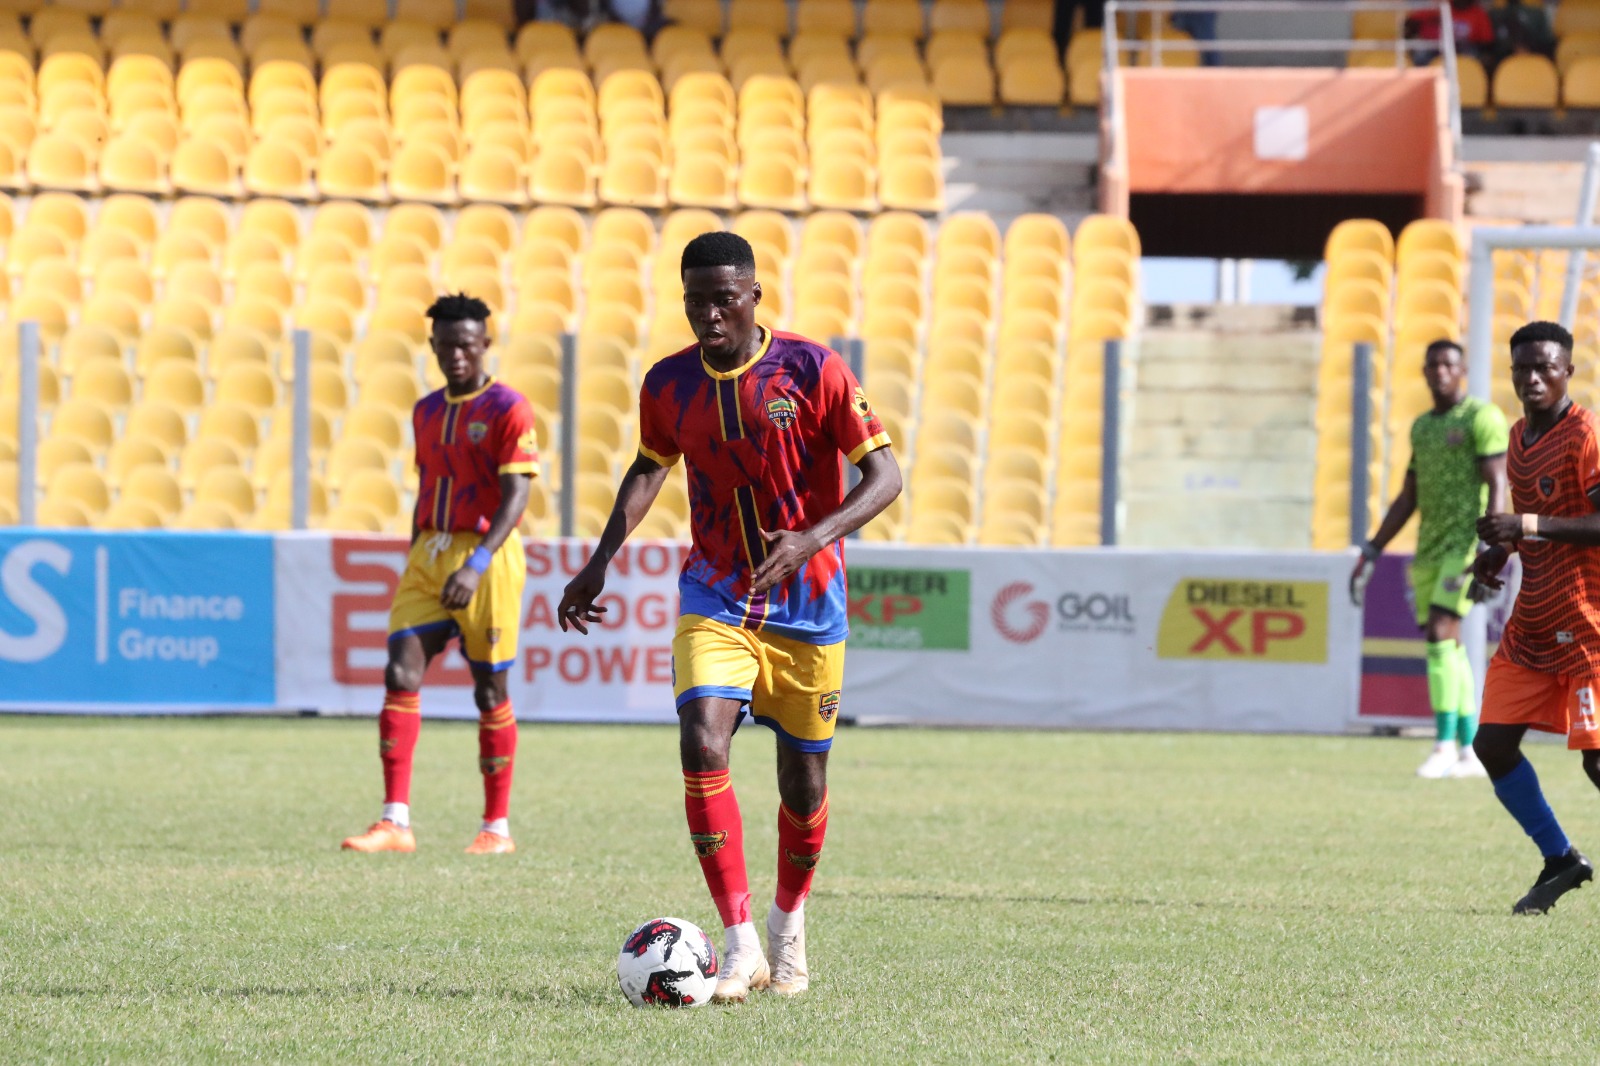 Hearts of Oak midfielder Glid Otanga expresses confidence and team dedication